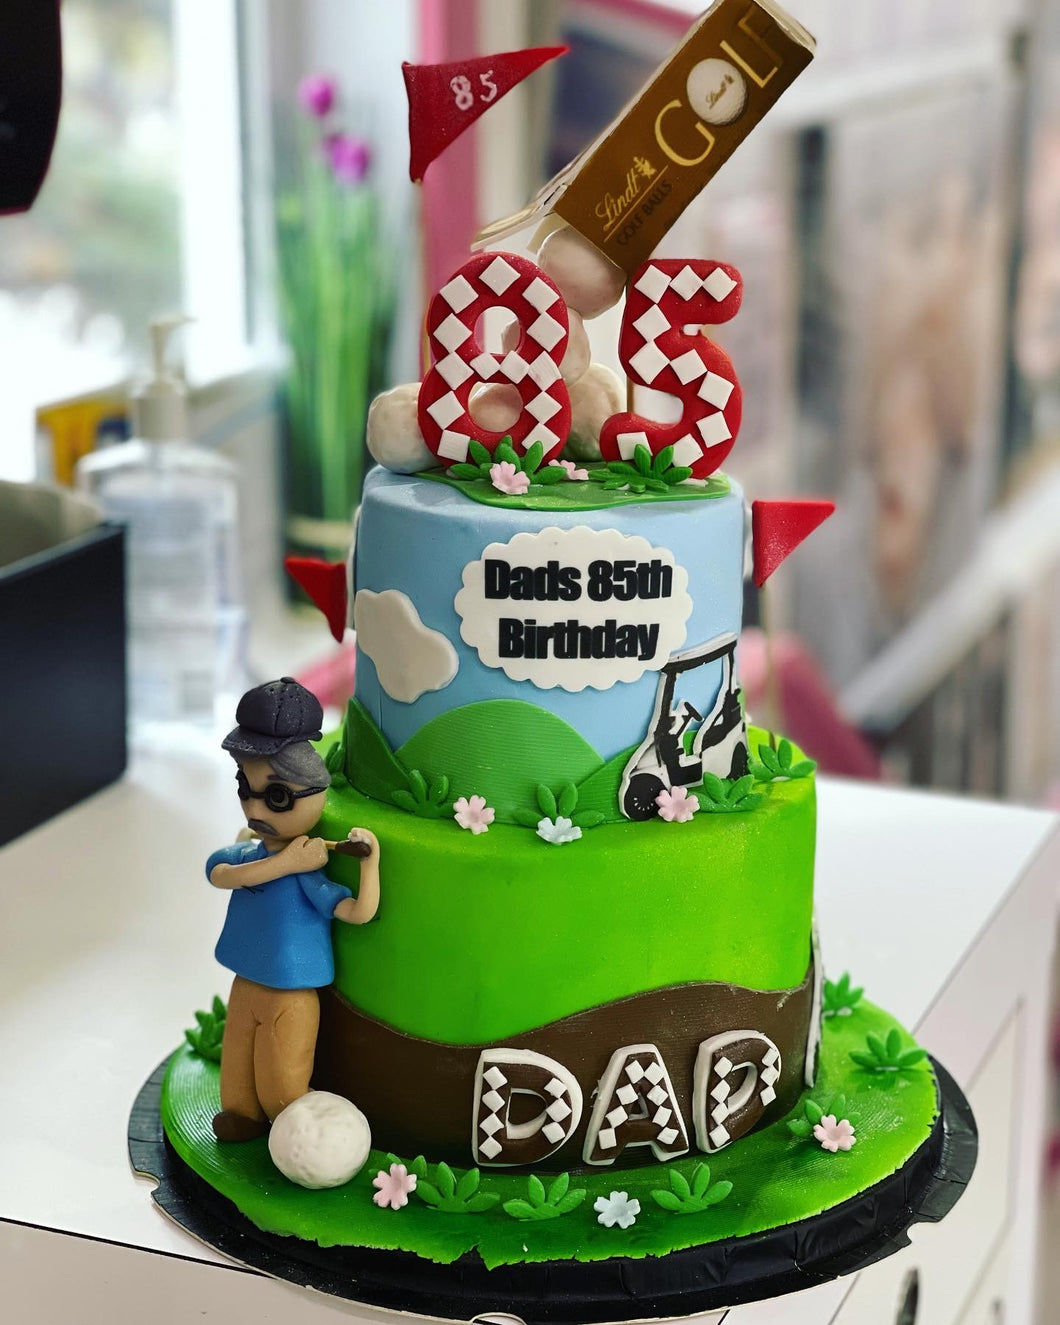 Dad 85th Birthday Cake